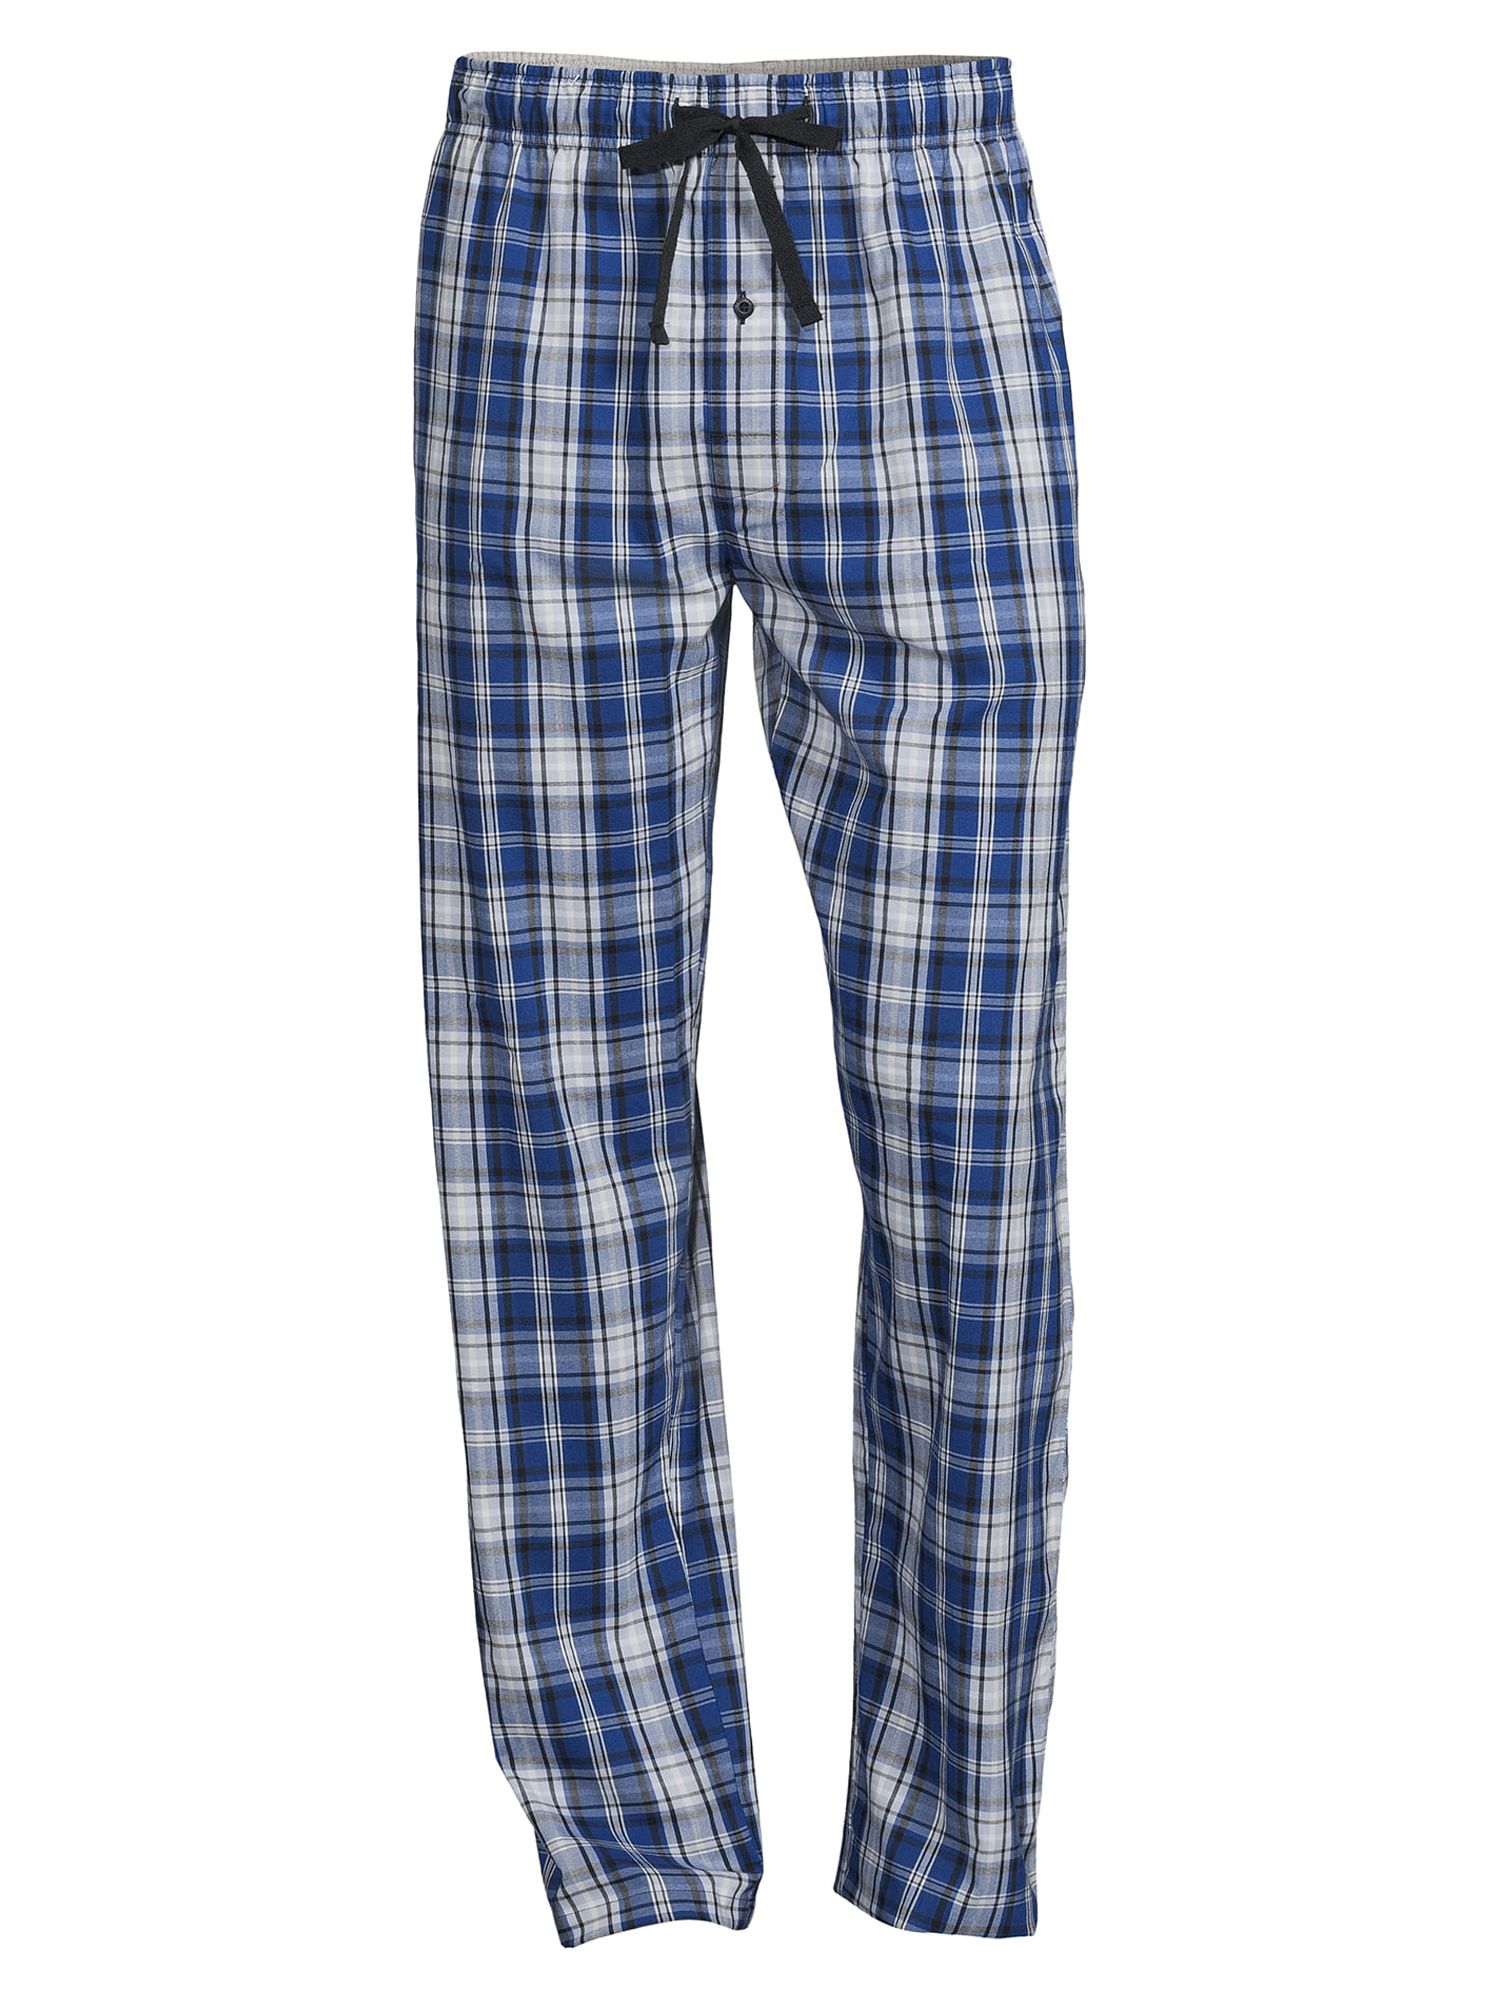 Hanes Men's and Big Men's Woven Stretch Pajama Pants, Sizes S-5X ...